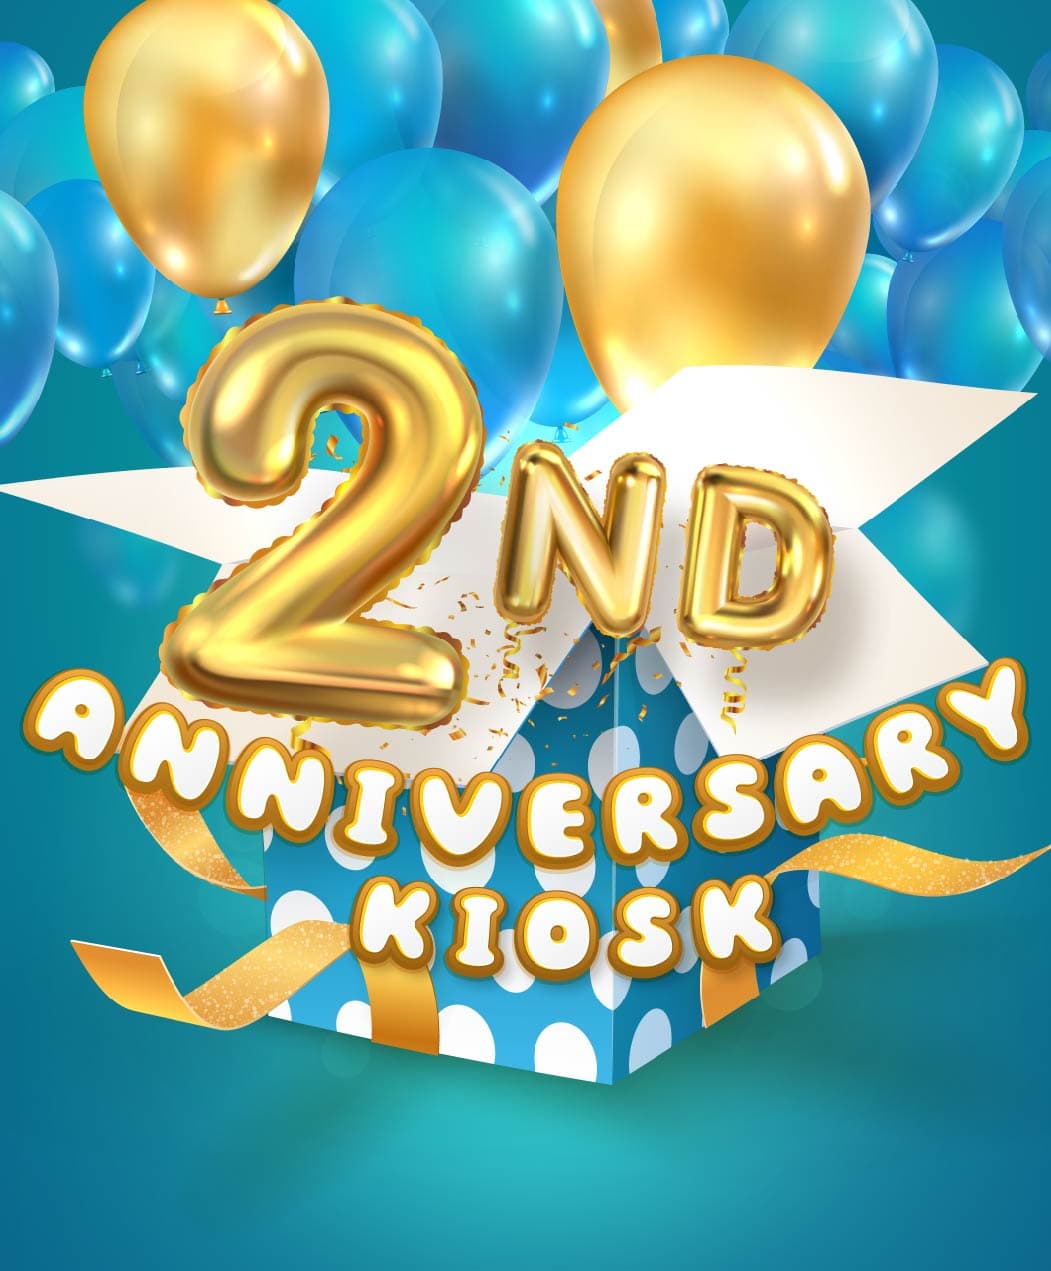 2nd Anniversary Kiosk